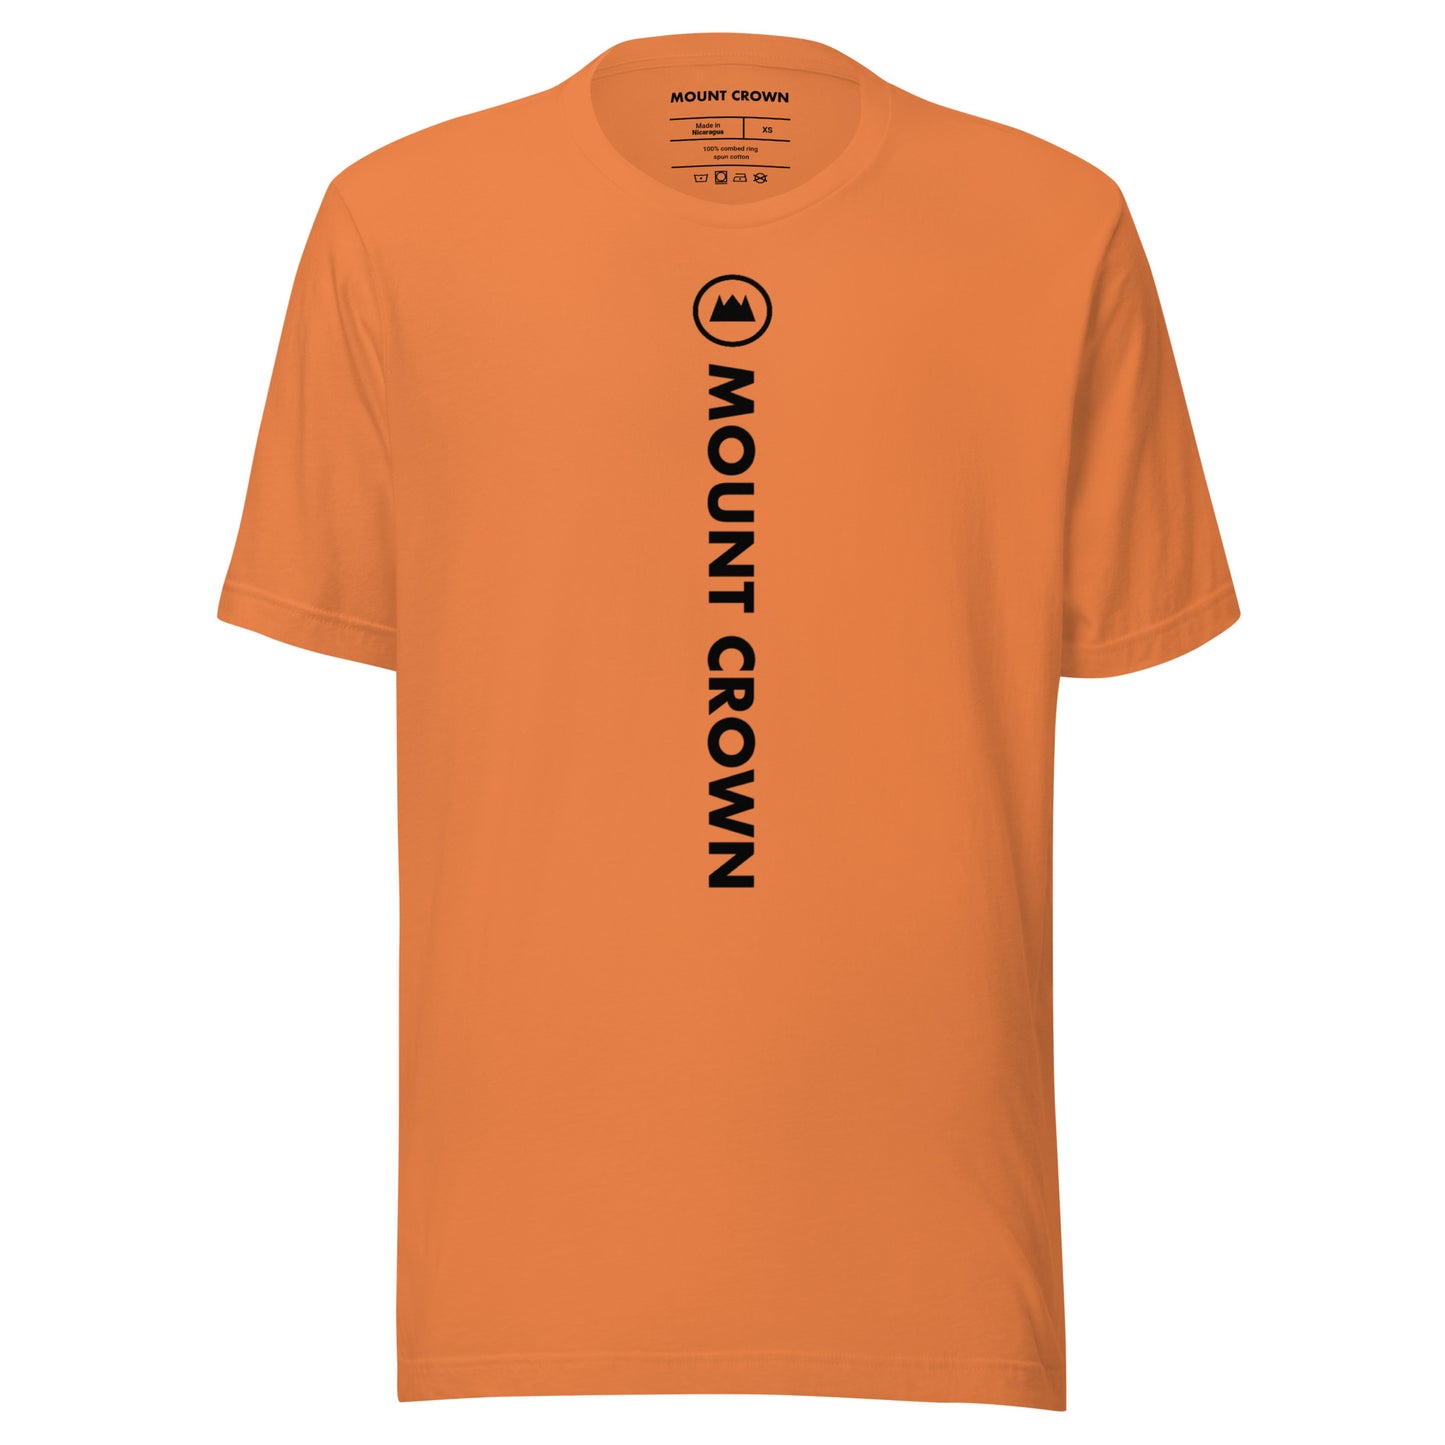 MOUNT CROWN (Blk)2 T-shirt